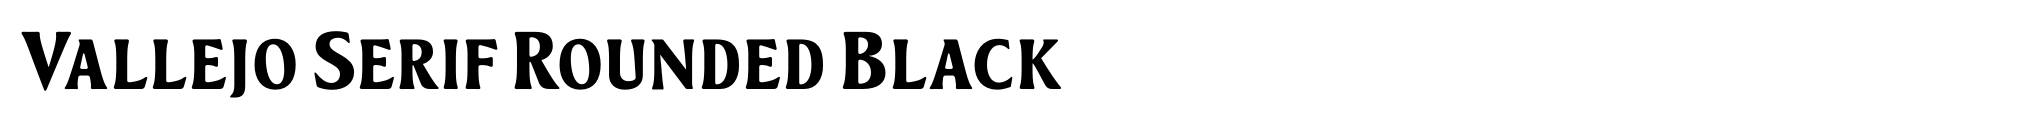 Vallejo Serif Rounded Black image